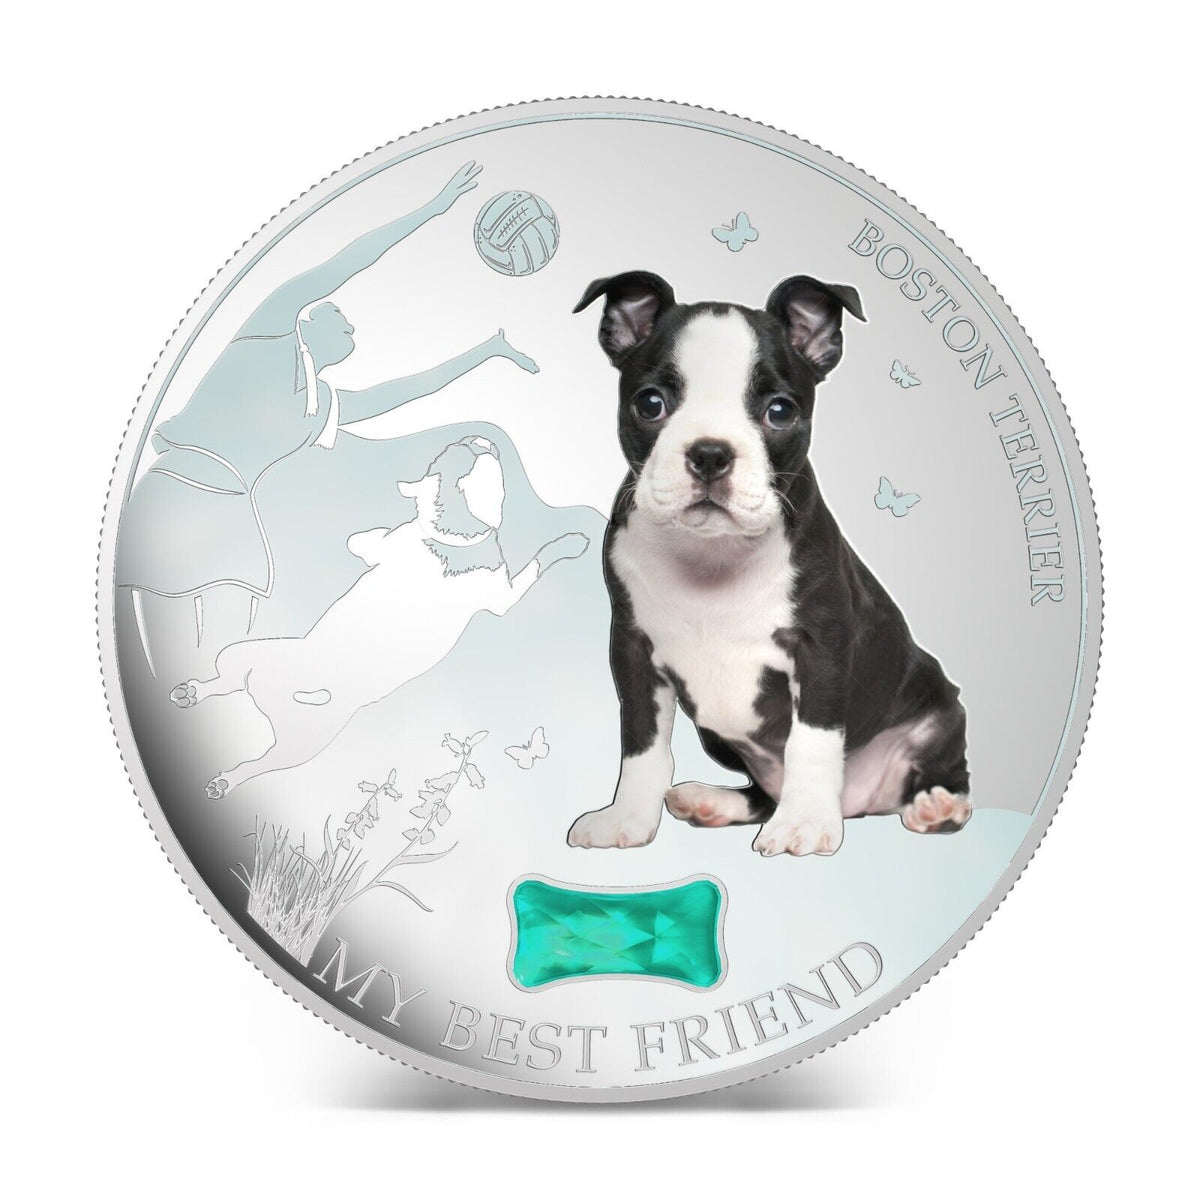 1 Oz Silver Coin 2013 $2 Fiji Dogs &amp; Cats Best Friend w/ stone - Boston Terrier-classypw.com-1